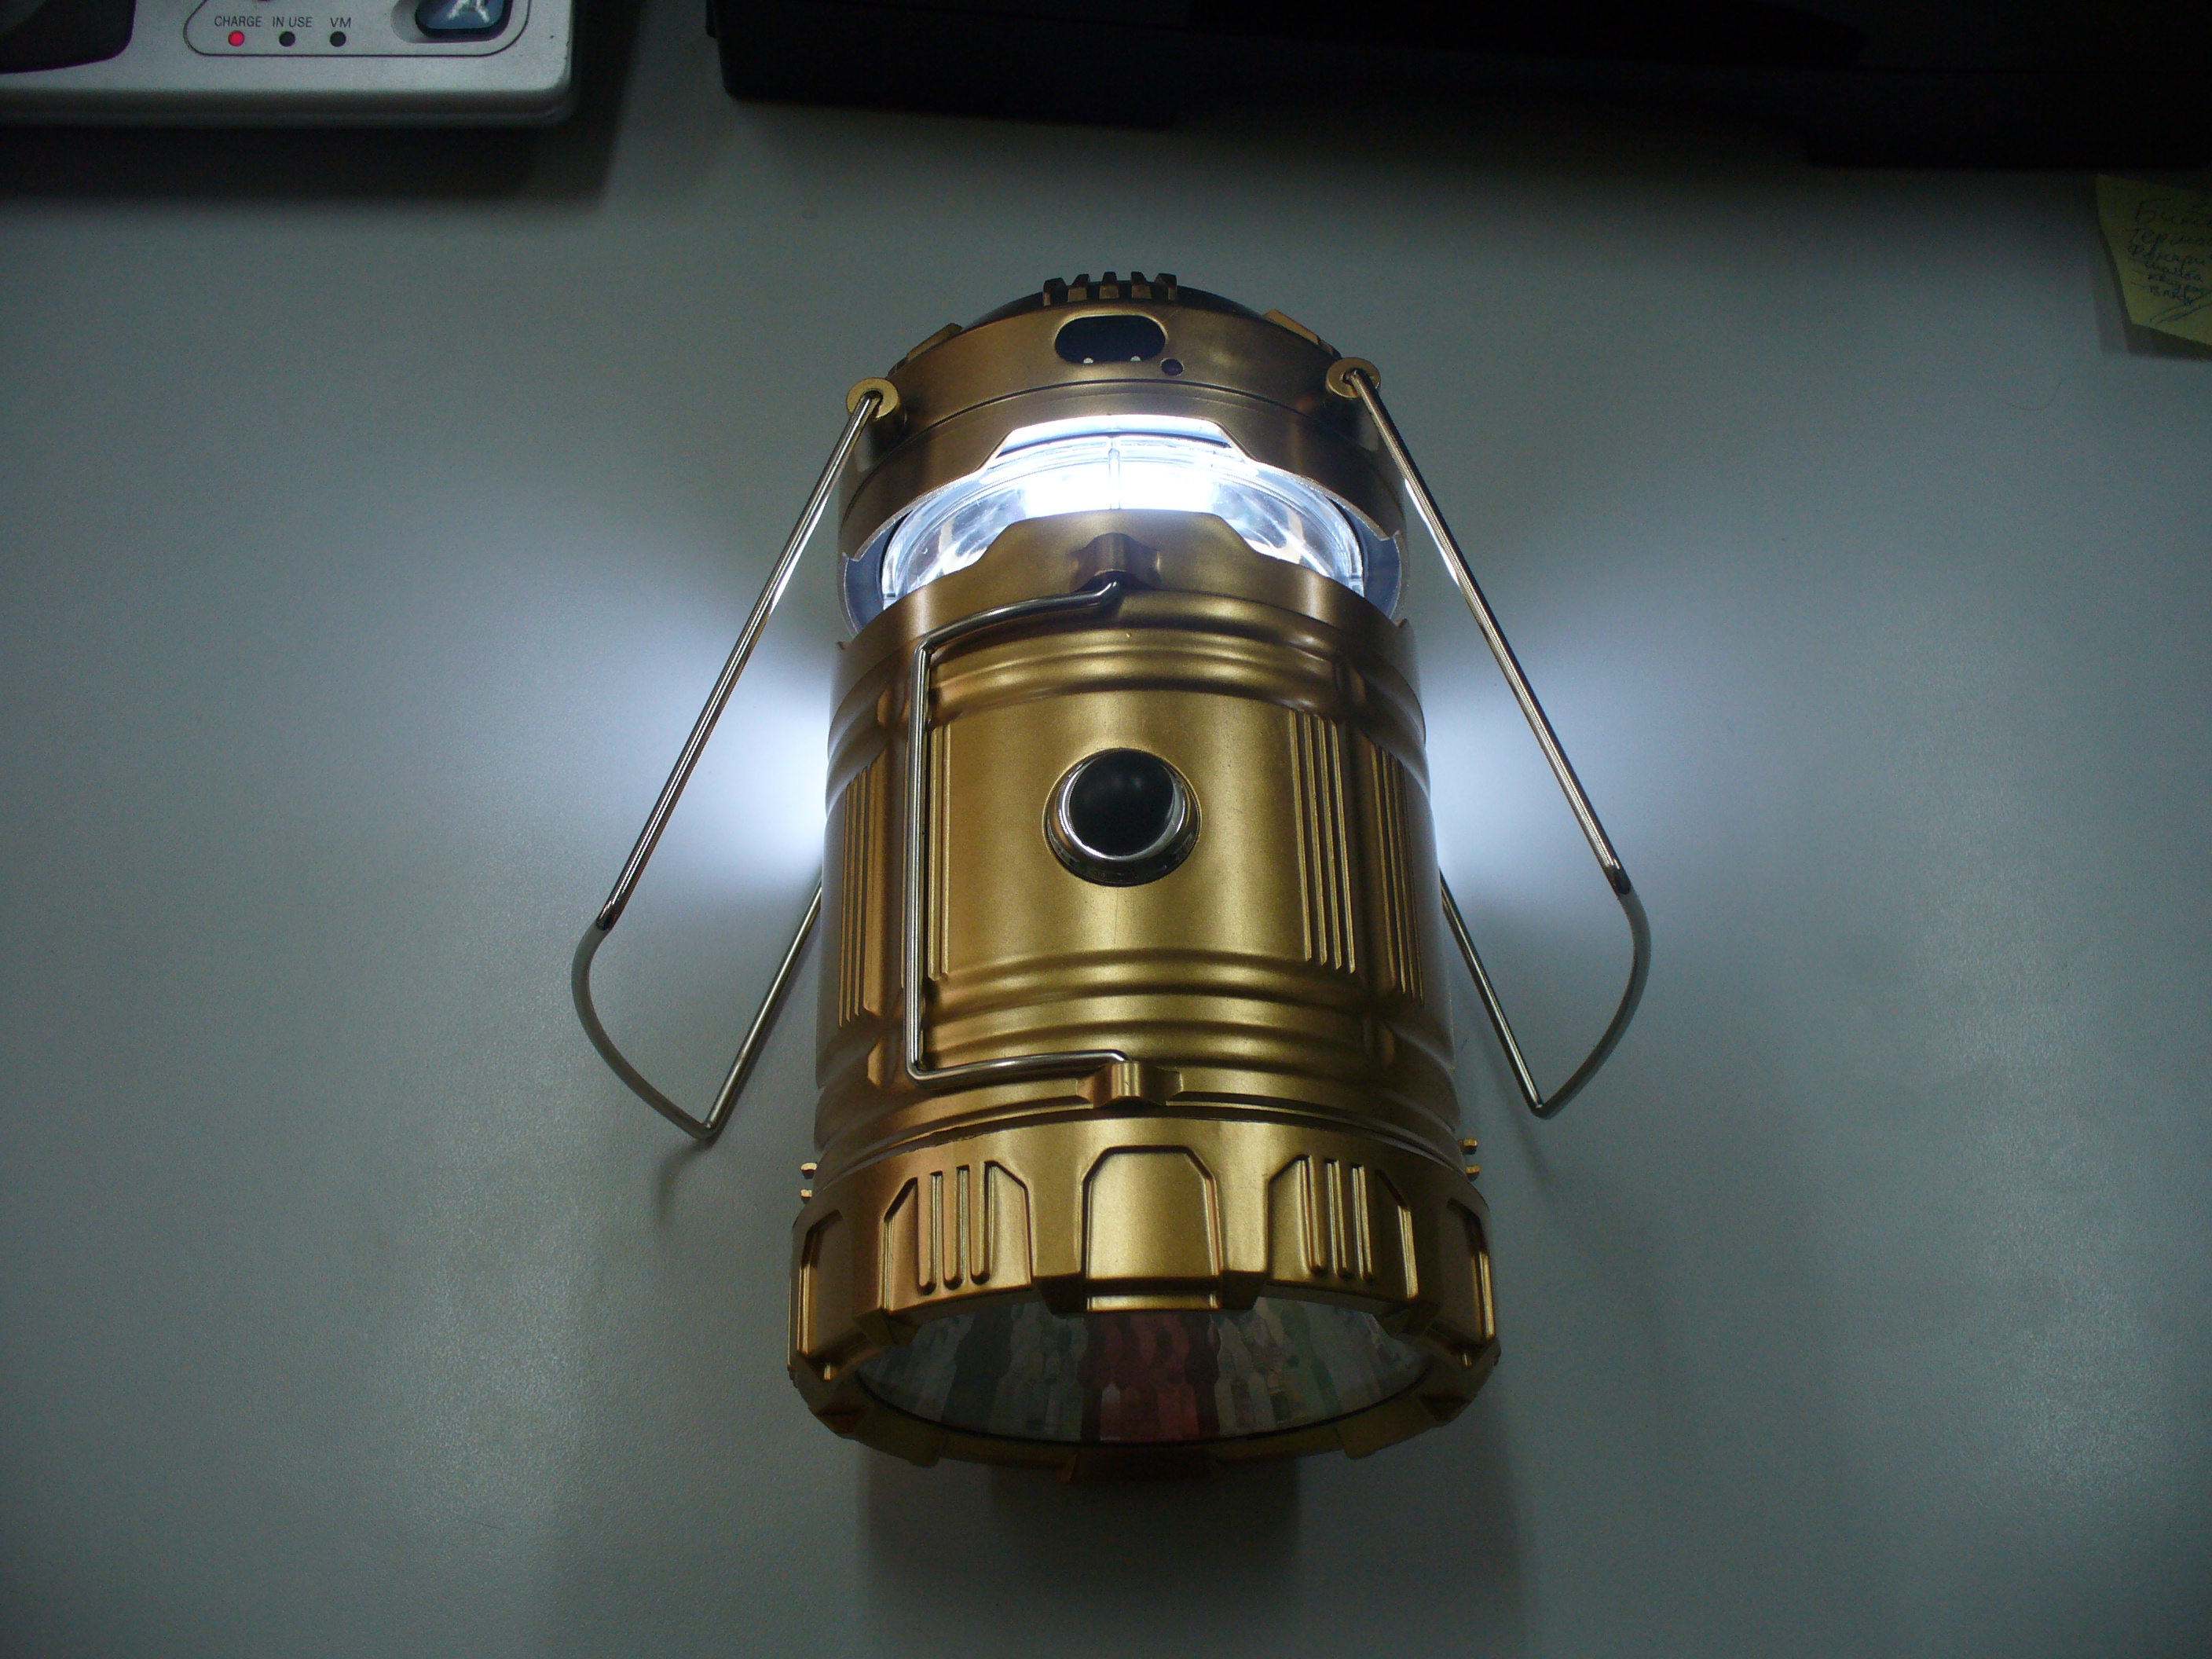 фонарик светод. кемпенговый аккум. MAGIC COOL JH-5801, 3 режима, USB - подзарядка